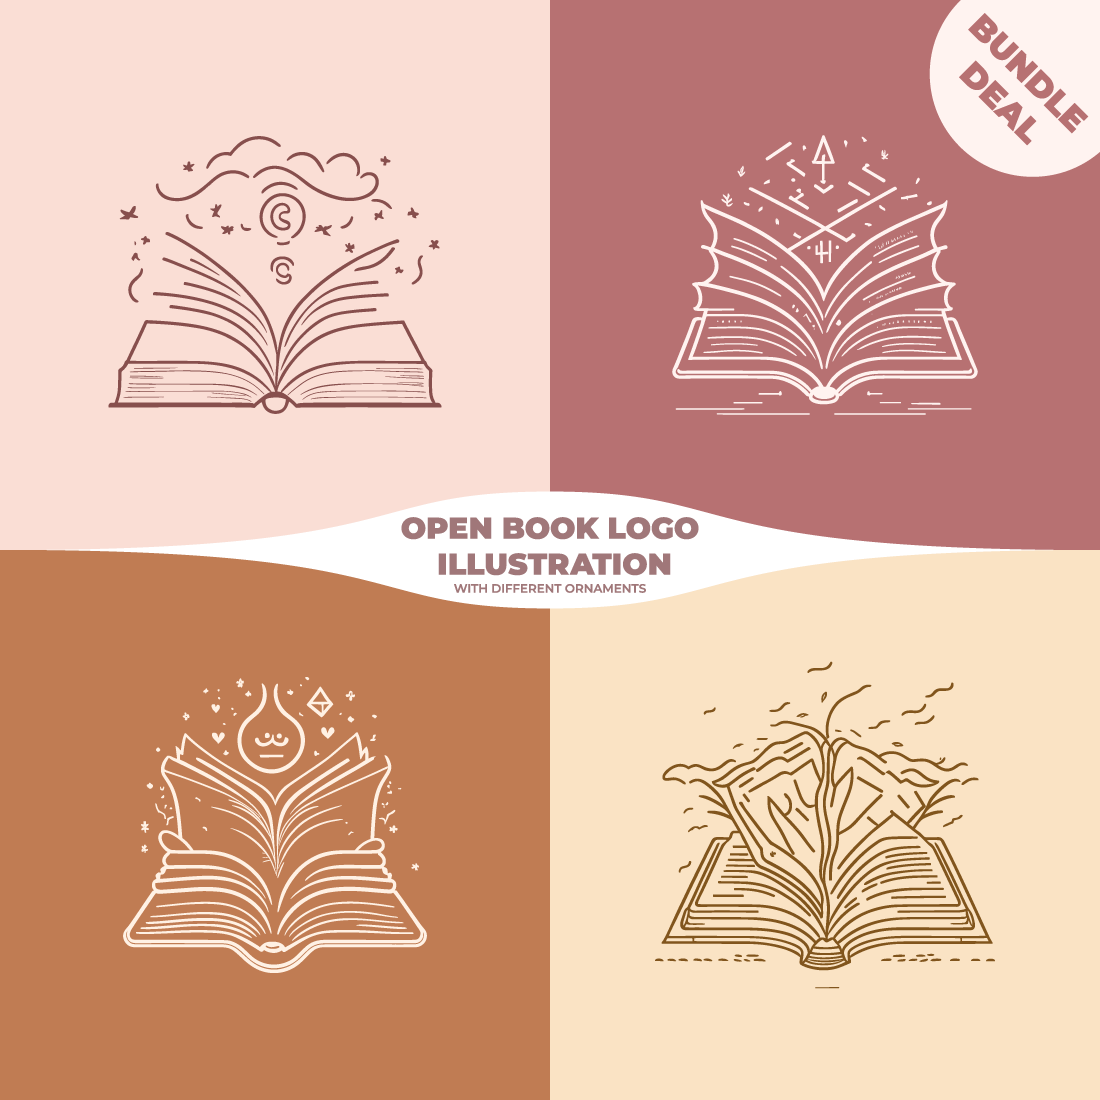 Open book with ornaments line art logo illustration bundle cover image.